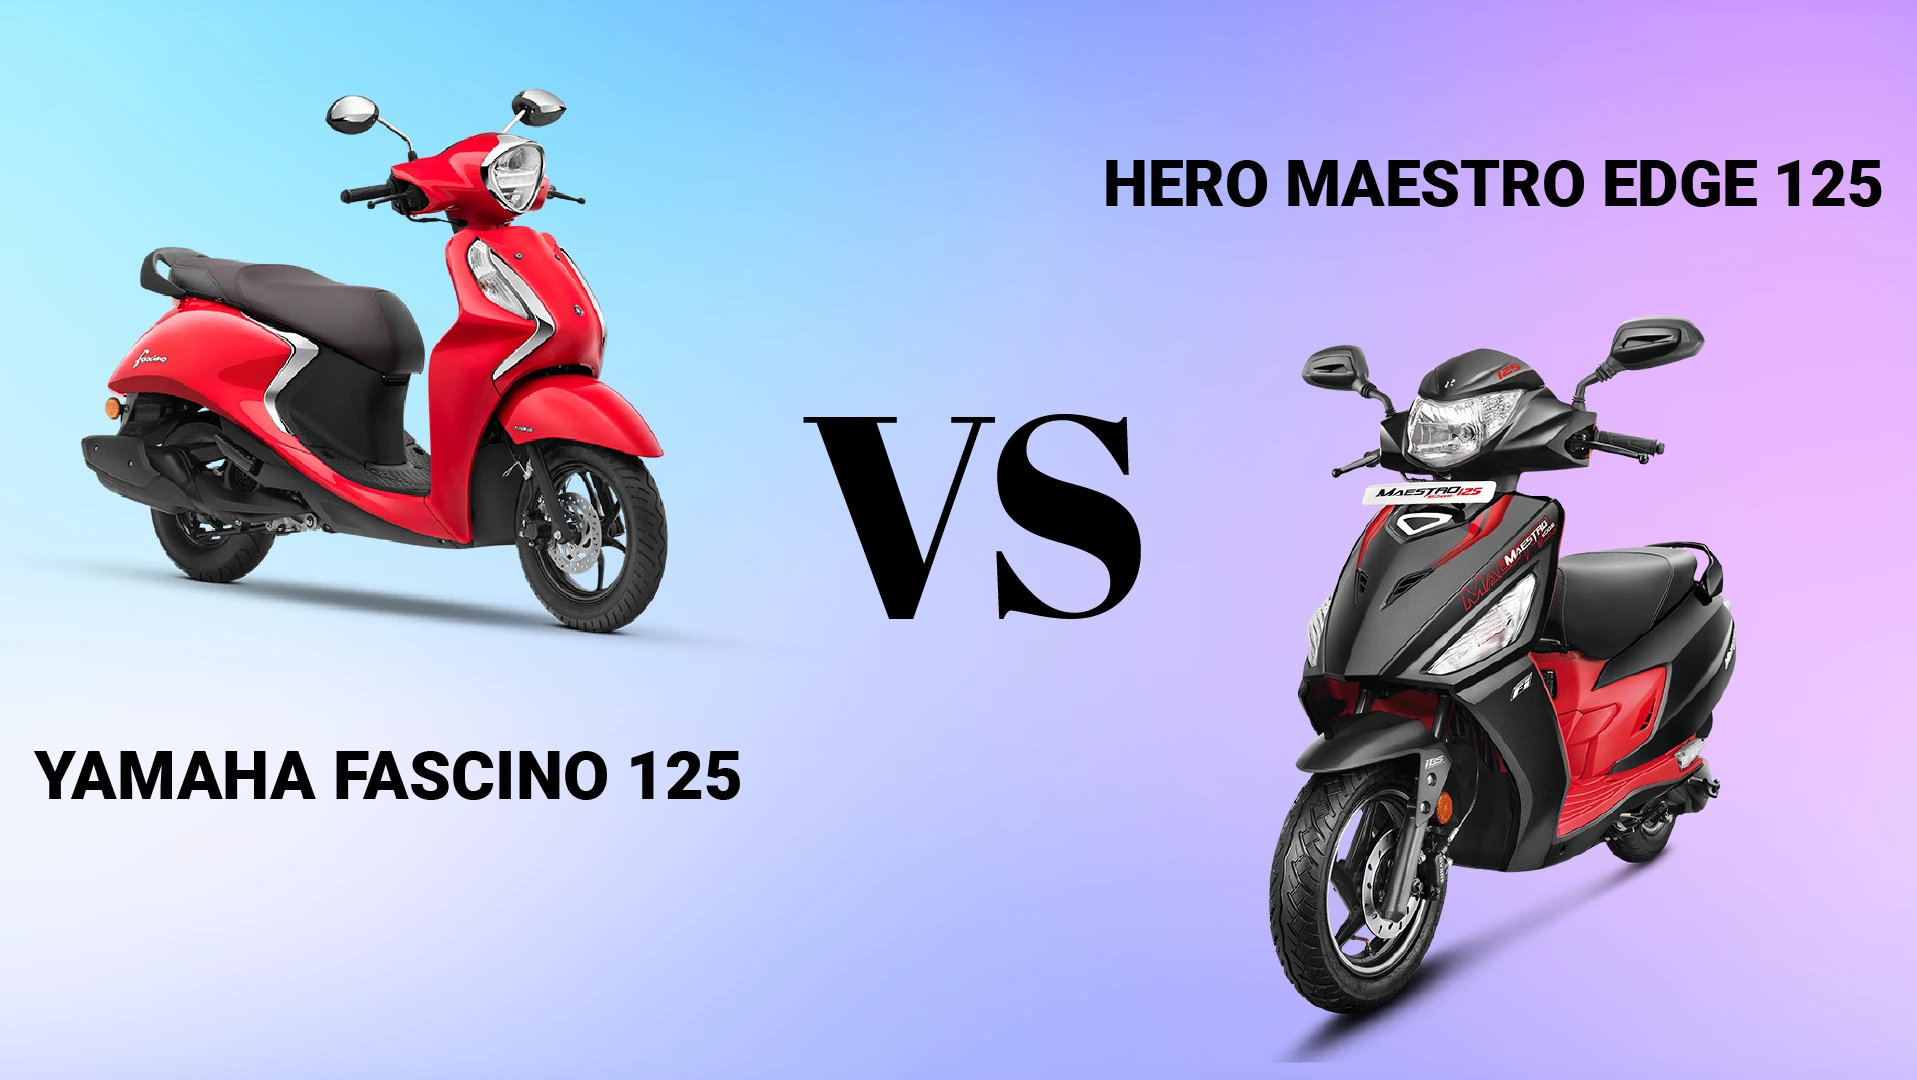 The Battle of the 125cc’s: Yamaha Fascino 125 vs Hero Maestro Edge 125